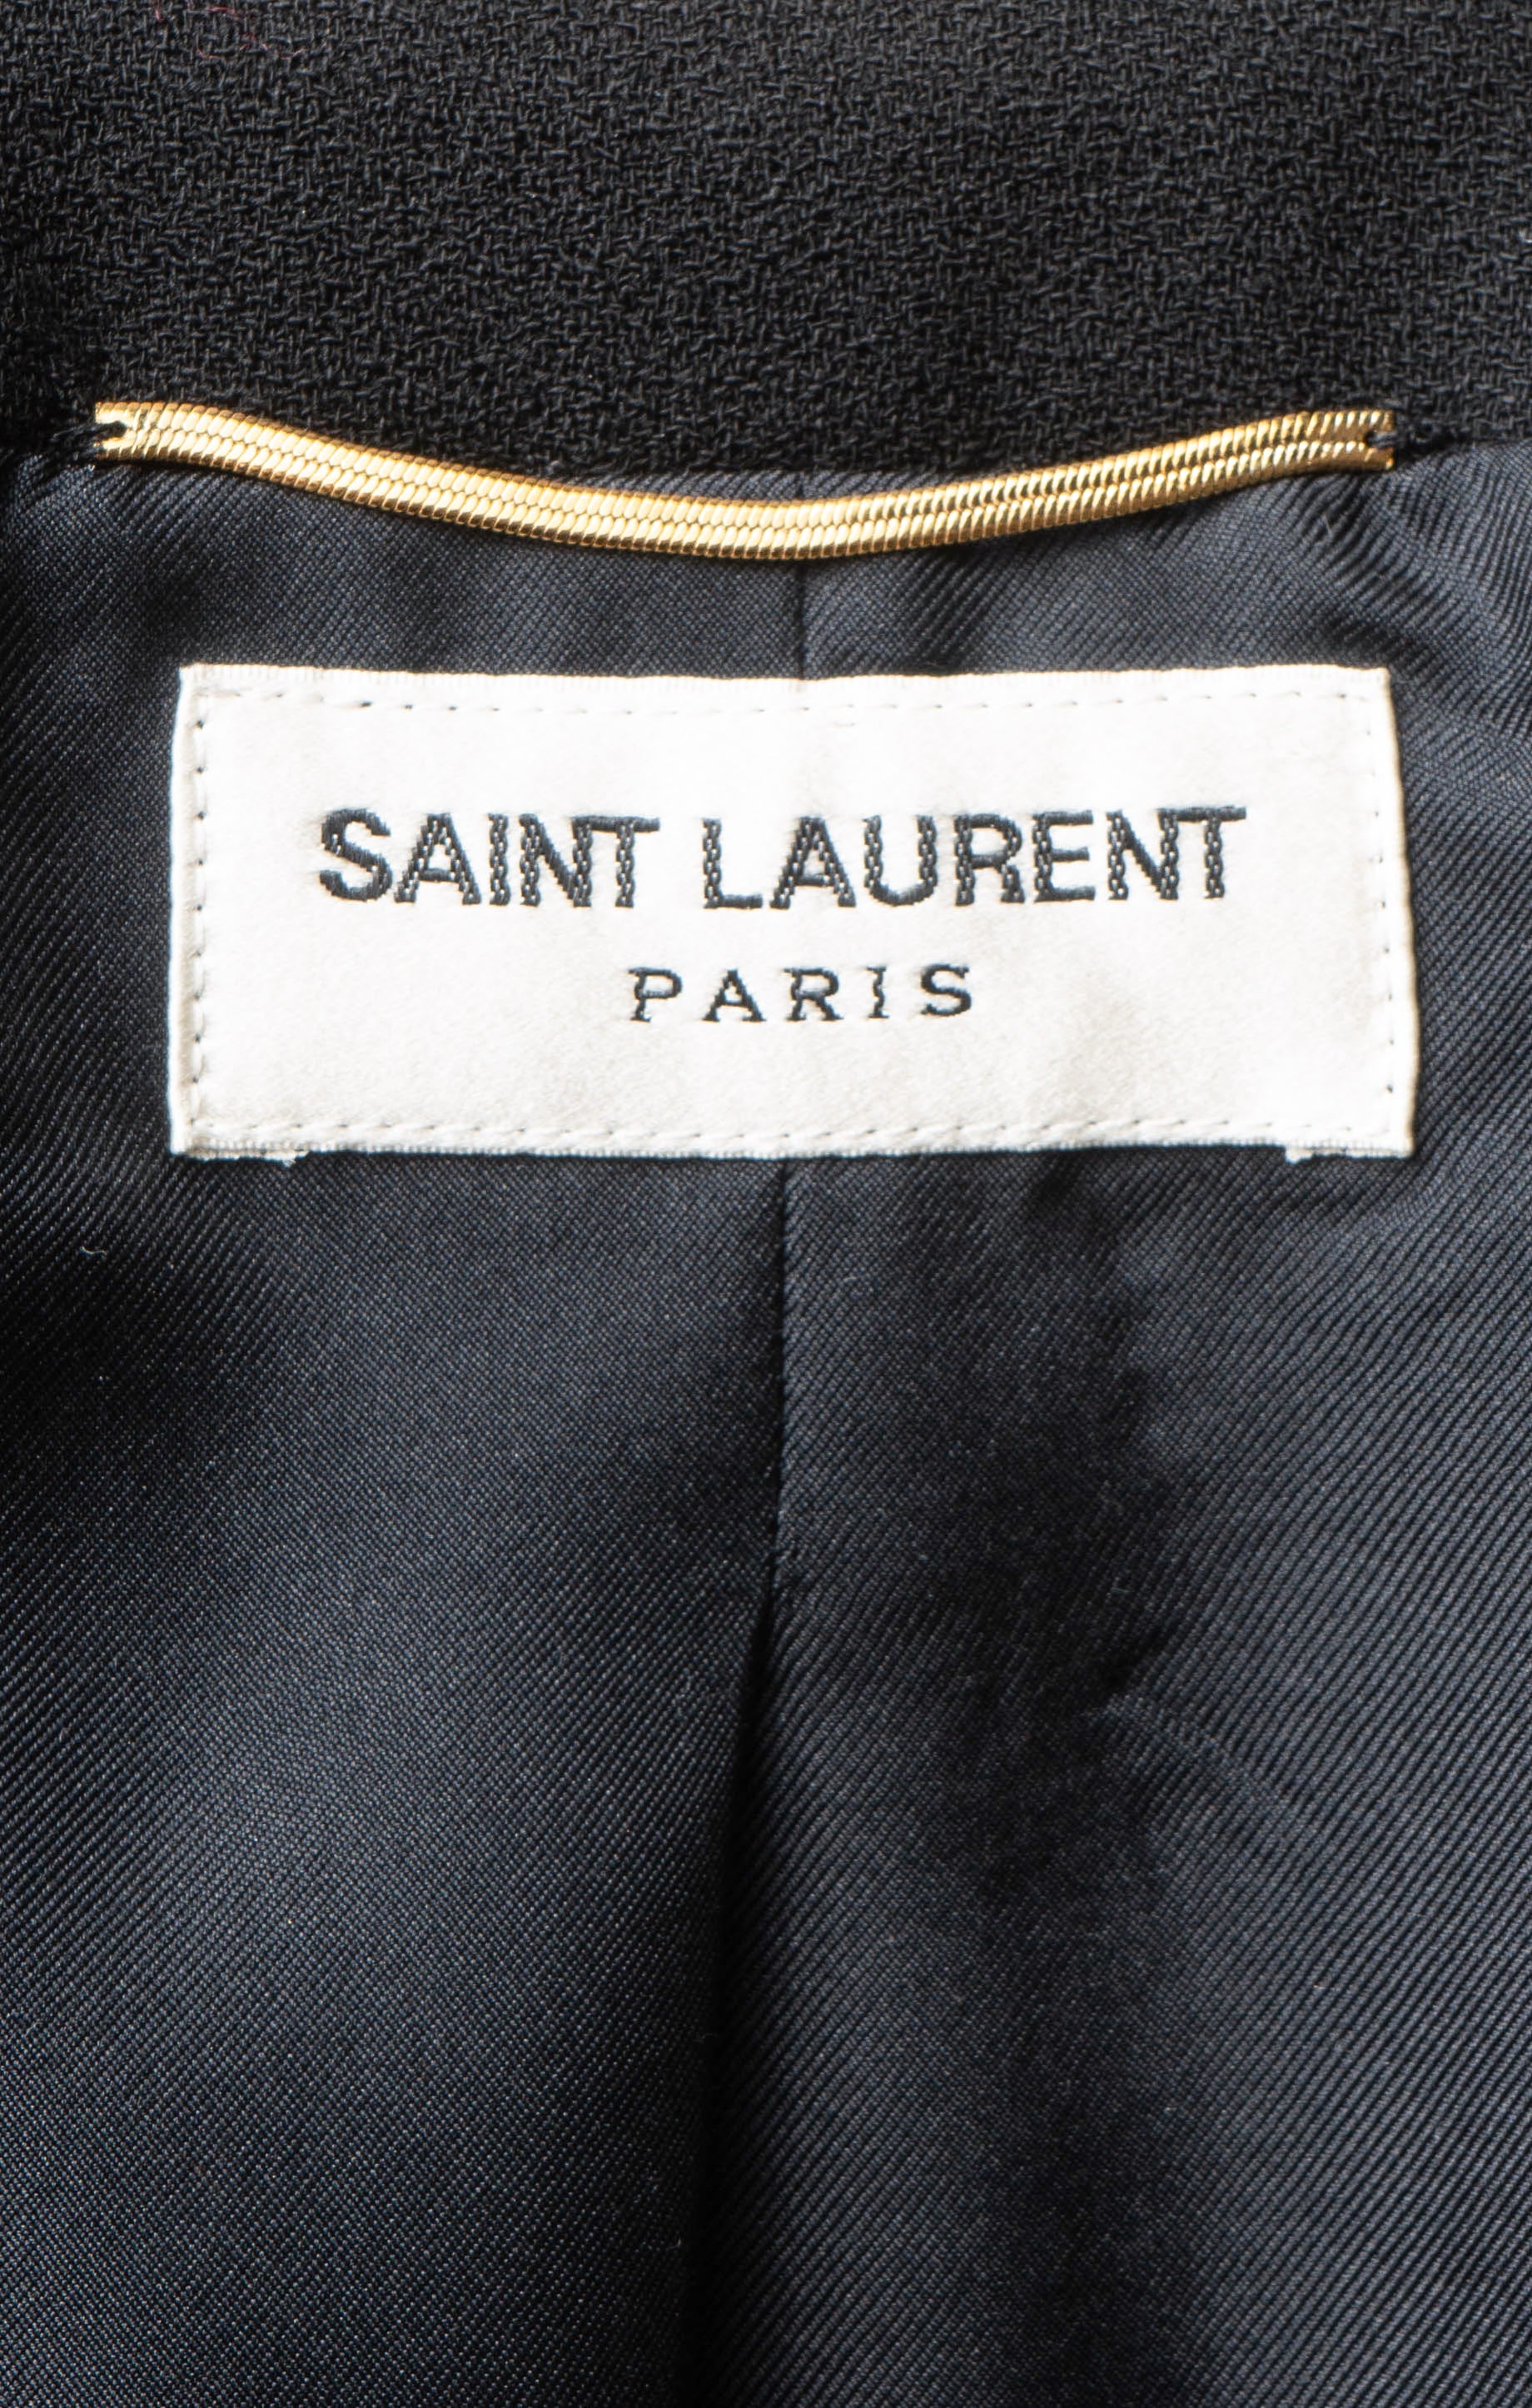 SAINT LAURENT (RARE) Jacket Size: FR 34 / Comparable to US 0-2